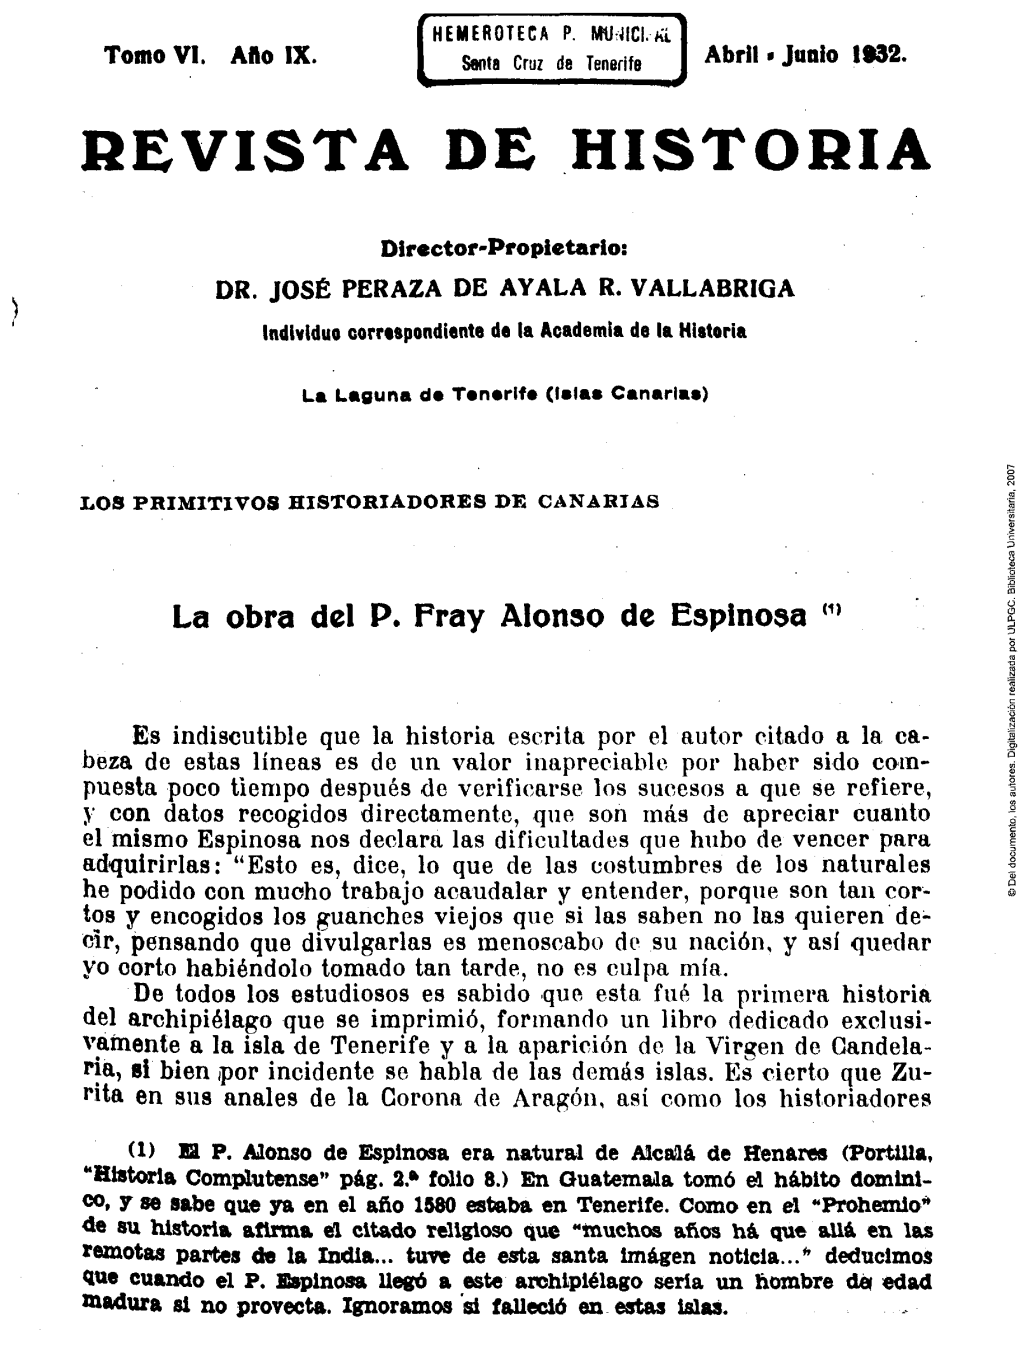 La Obra Del P. Fray Alonso De Espinosa (1)